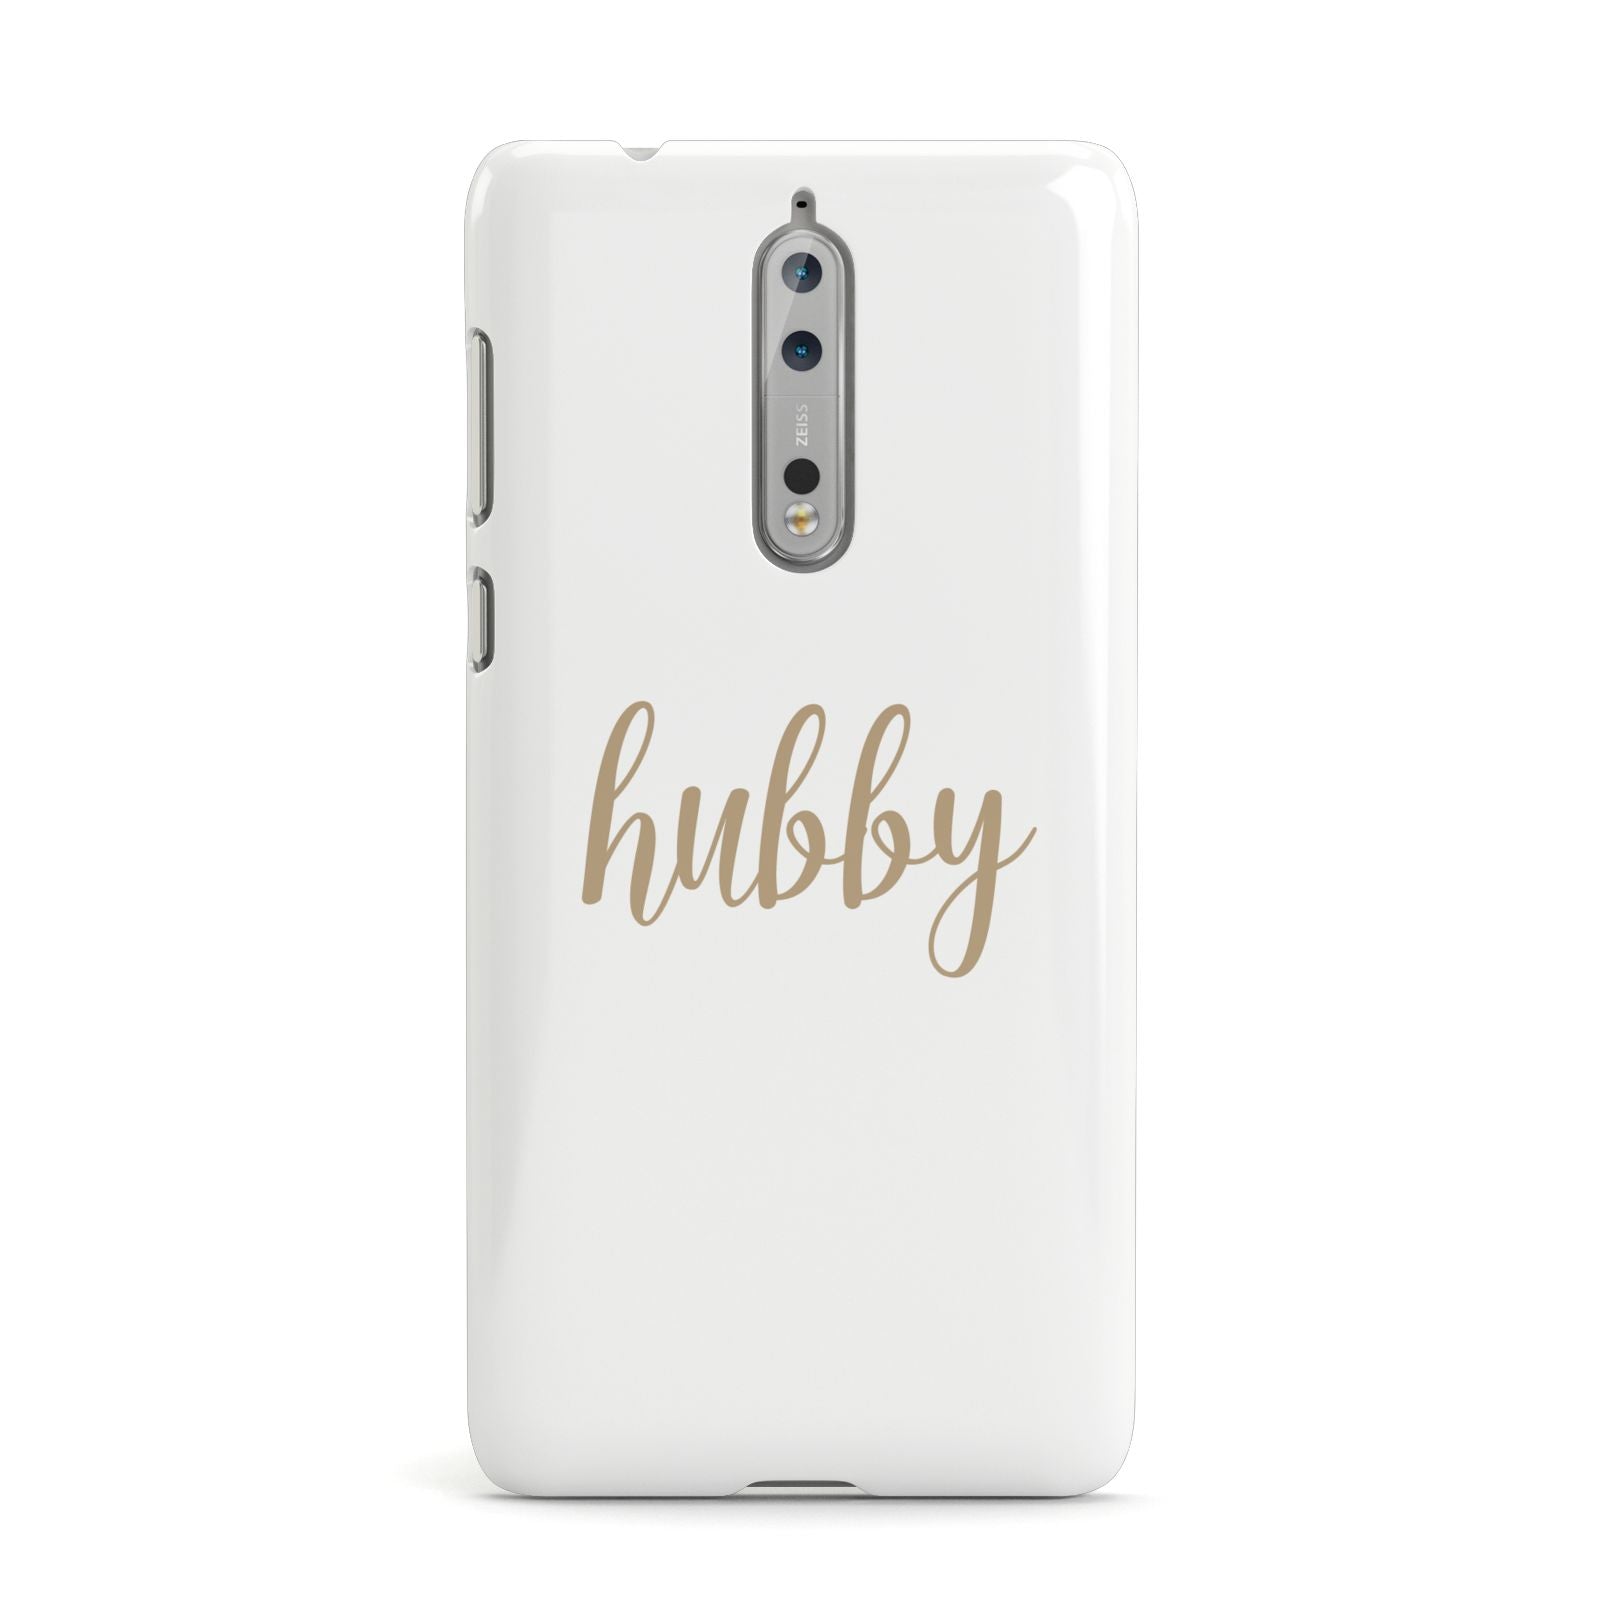 Hubby Nokia Case